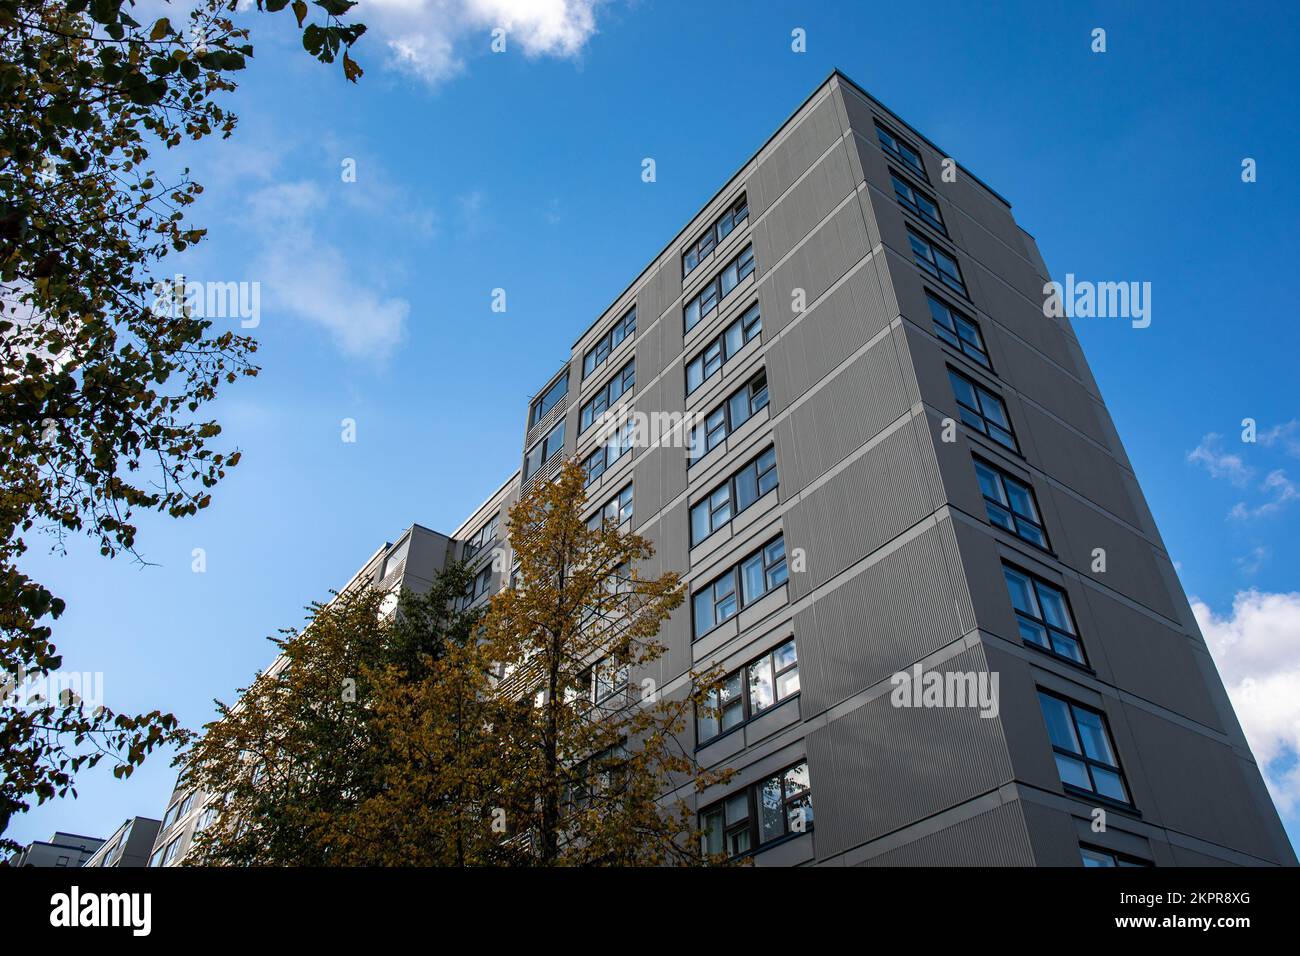 Merihaka district residential concrete building in Helsinki, Finland Stock Photo